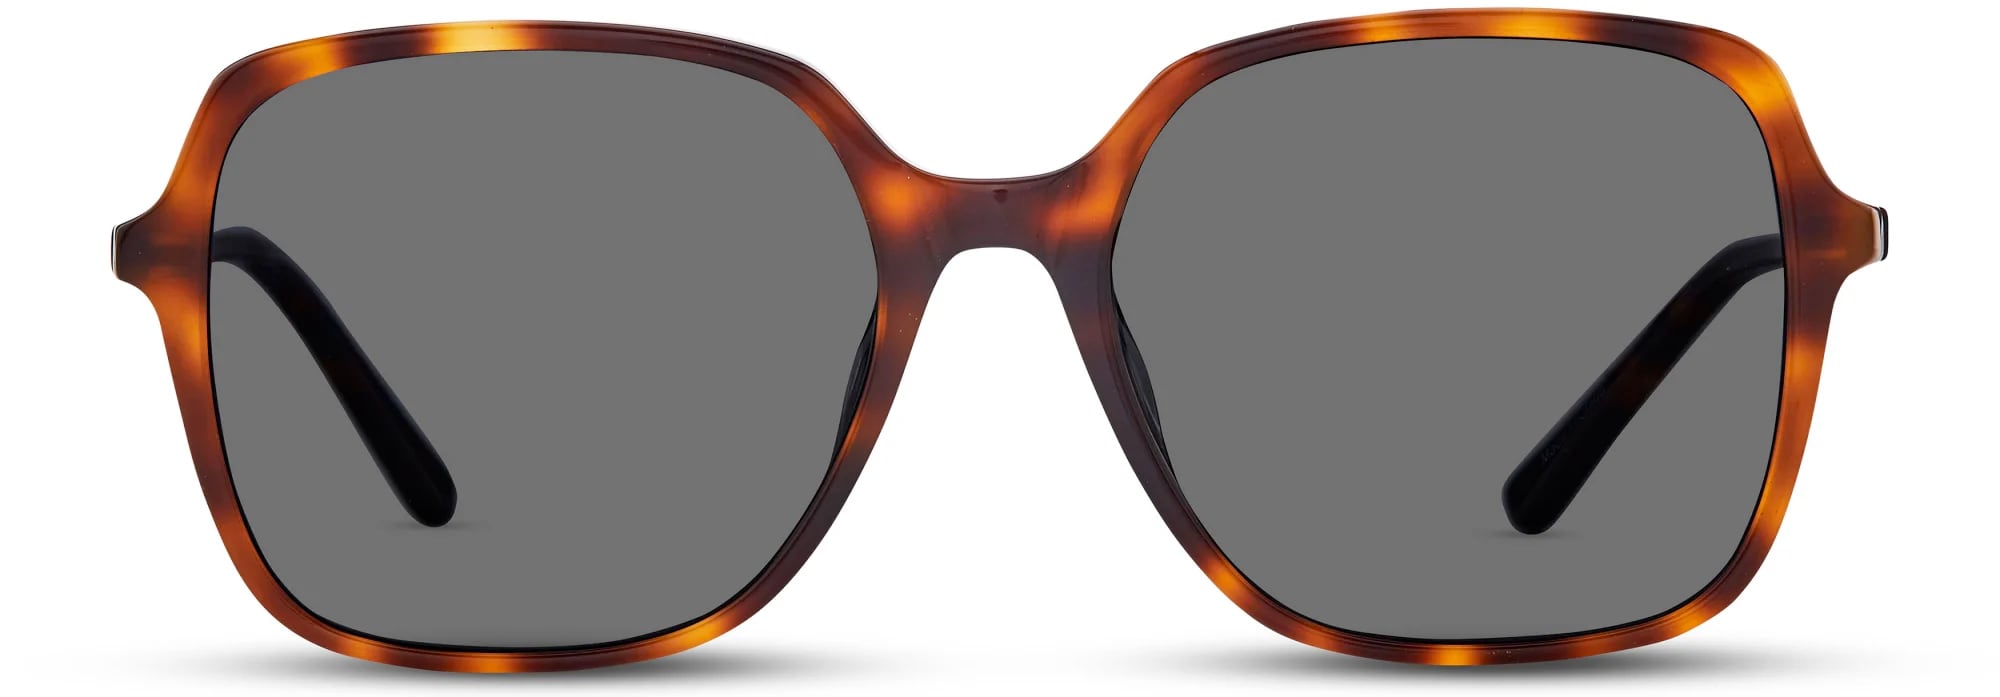 Old-money-inspired sunglasses